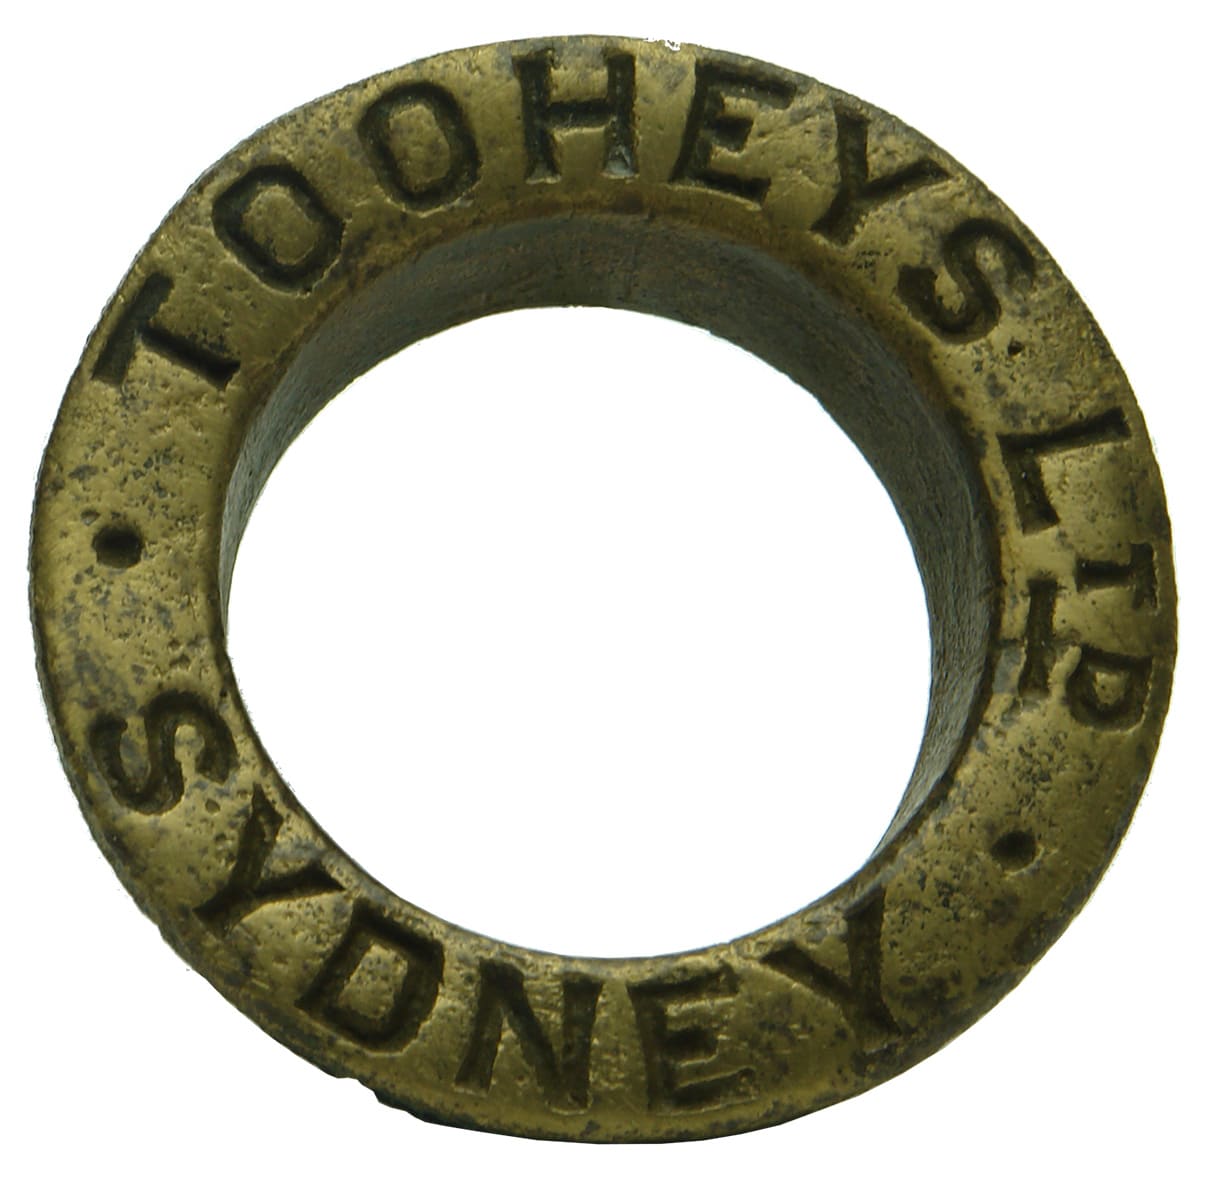 Tooheys Sydney Brass Barrel Bung